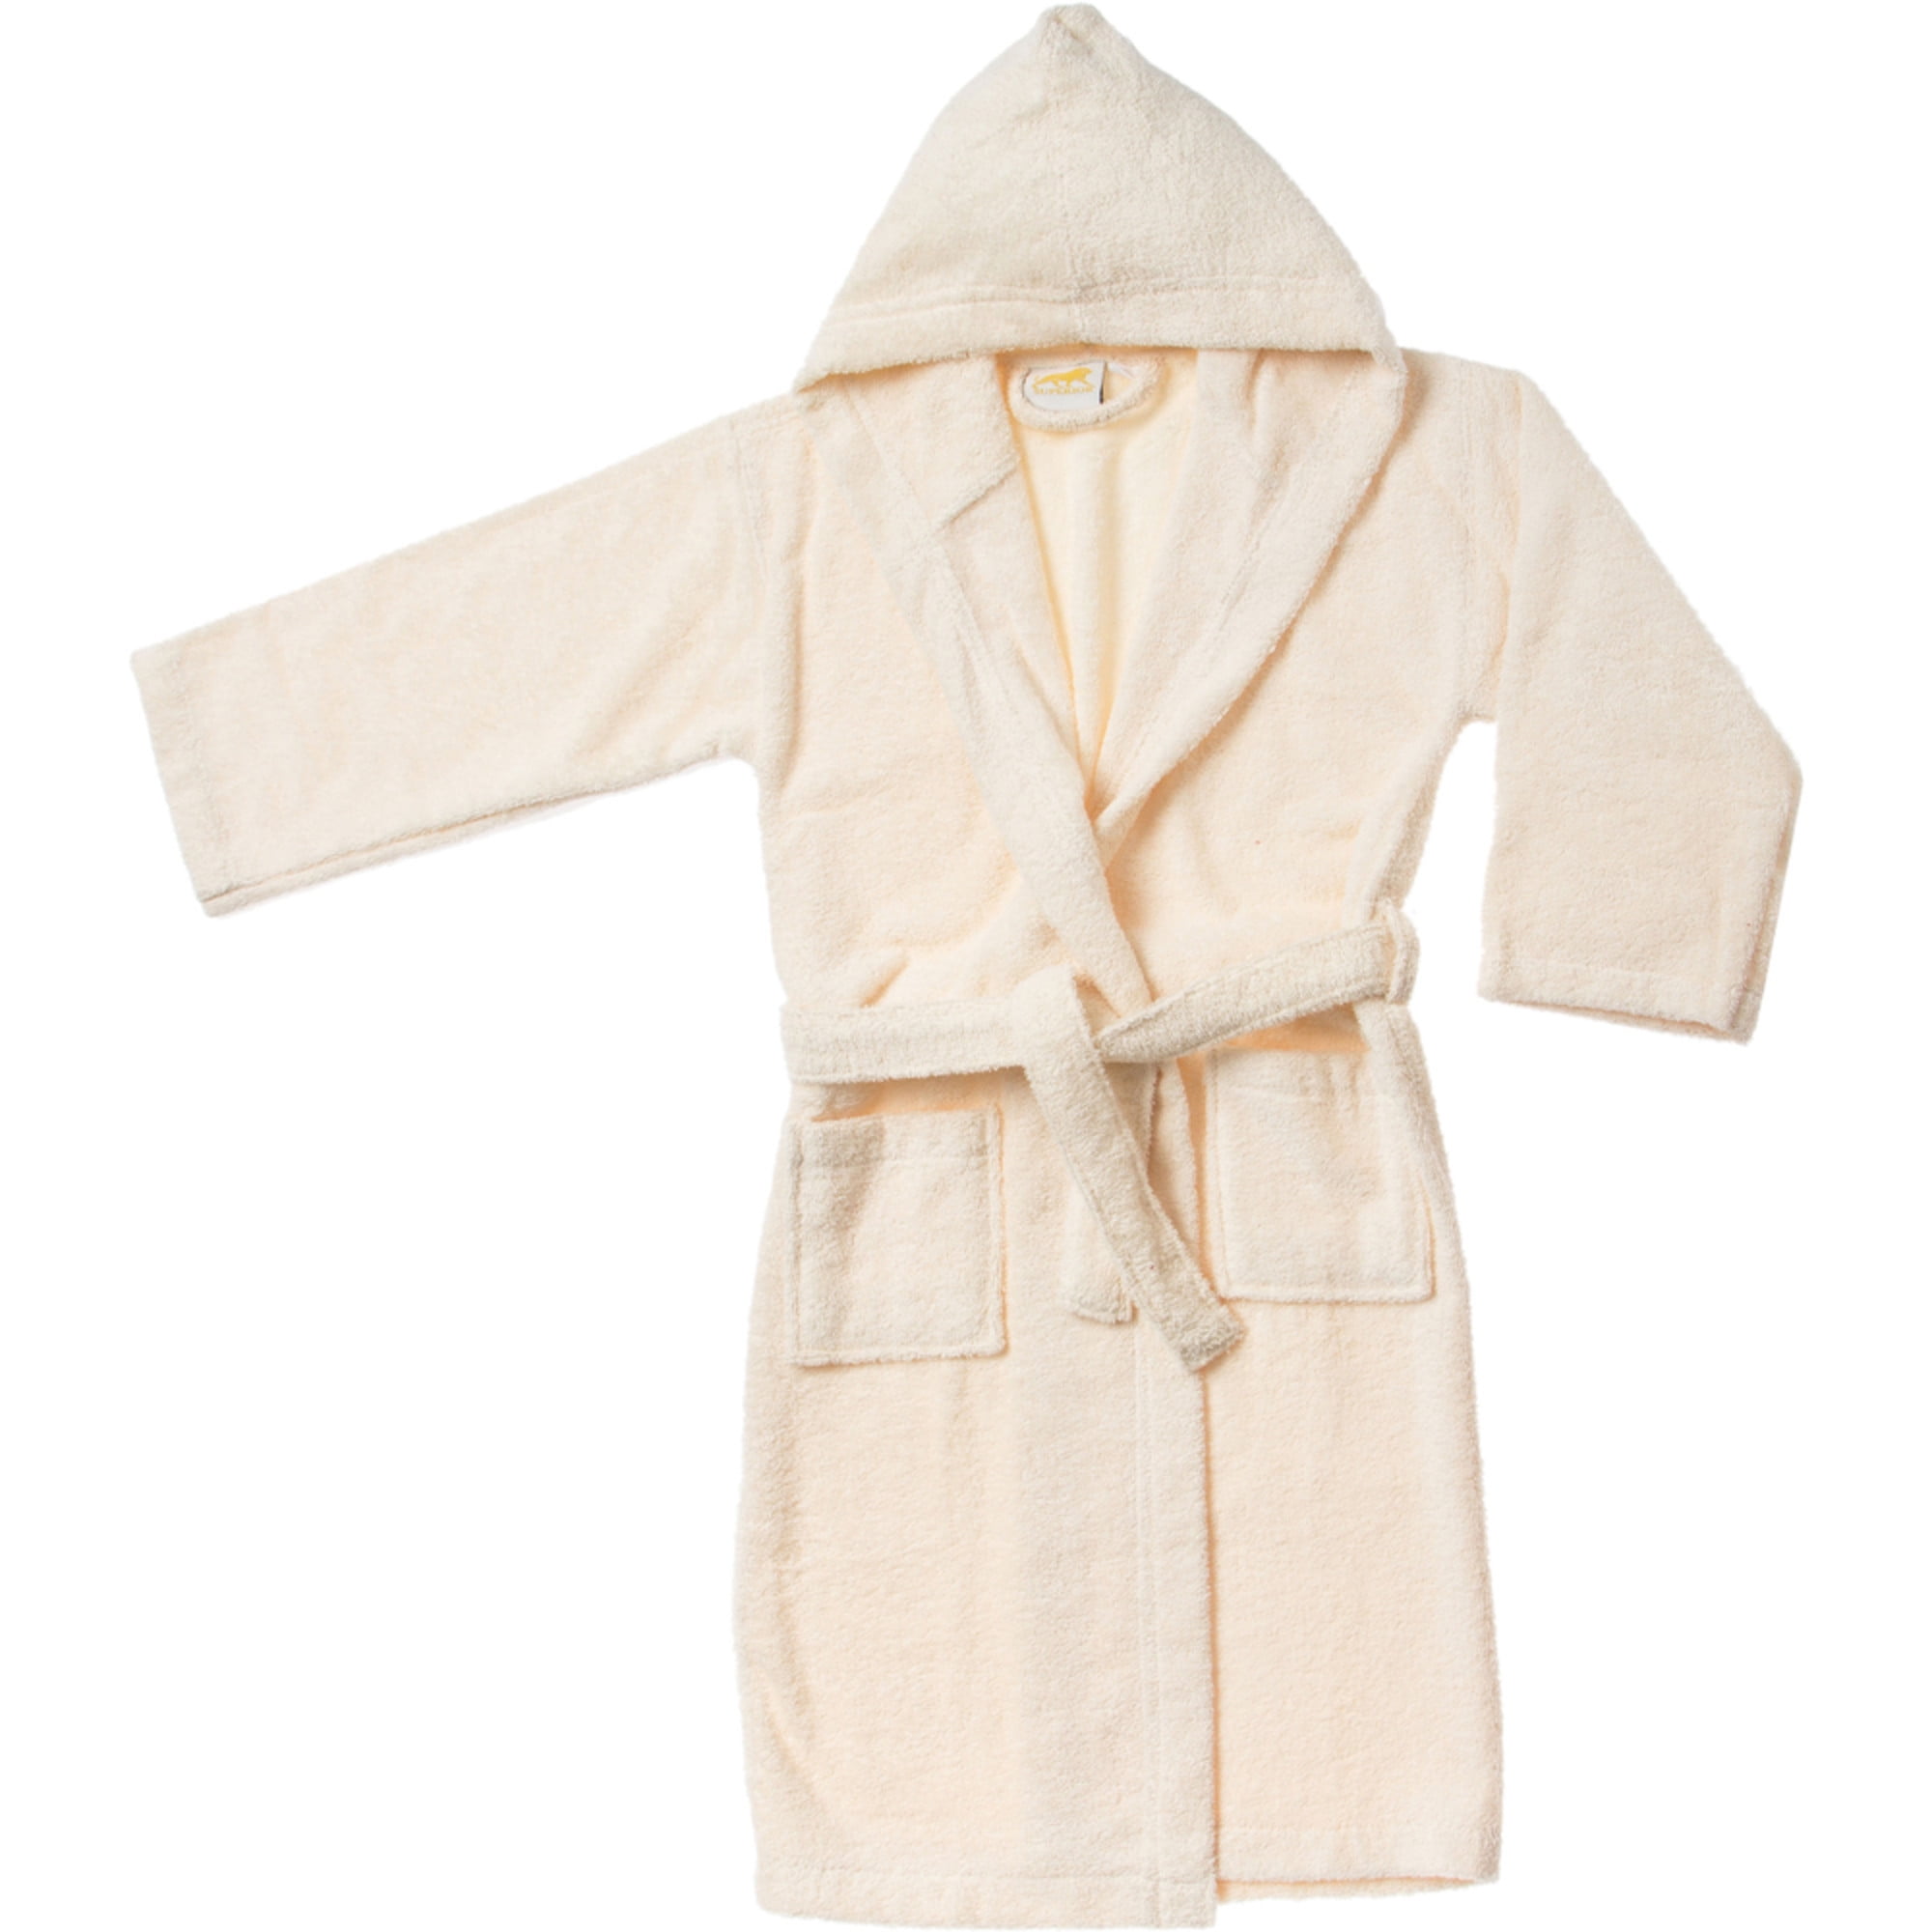 Cotton Terry Kids Unisex Bath Robe, Small/Medium, Ivory - Walmart.com